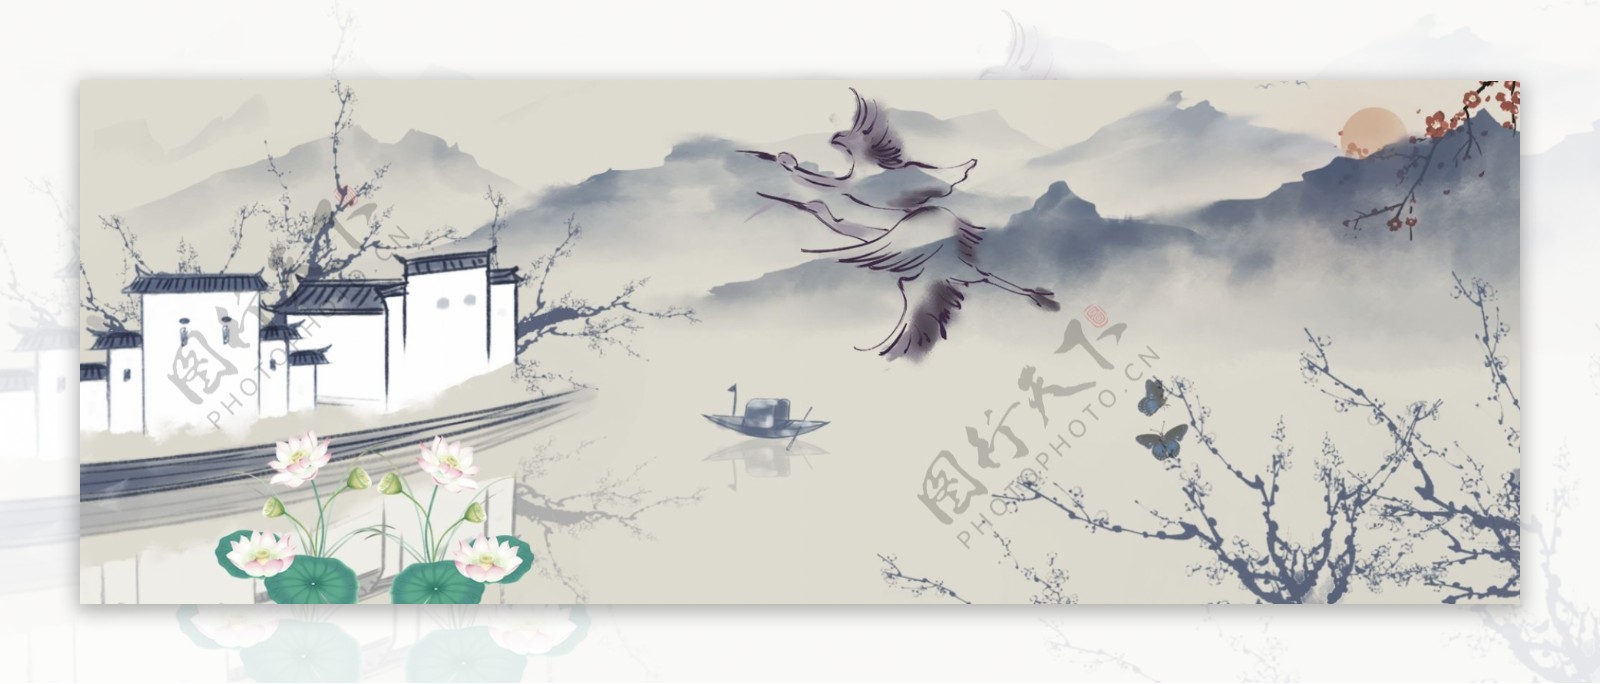 中国风荷花banner背景图